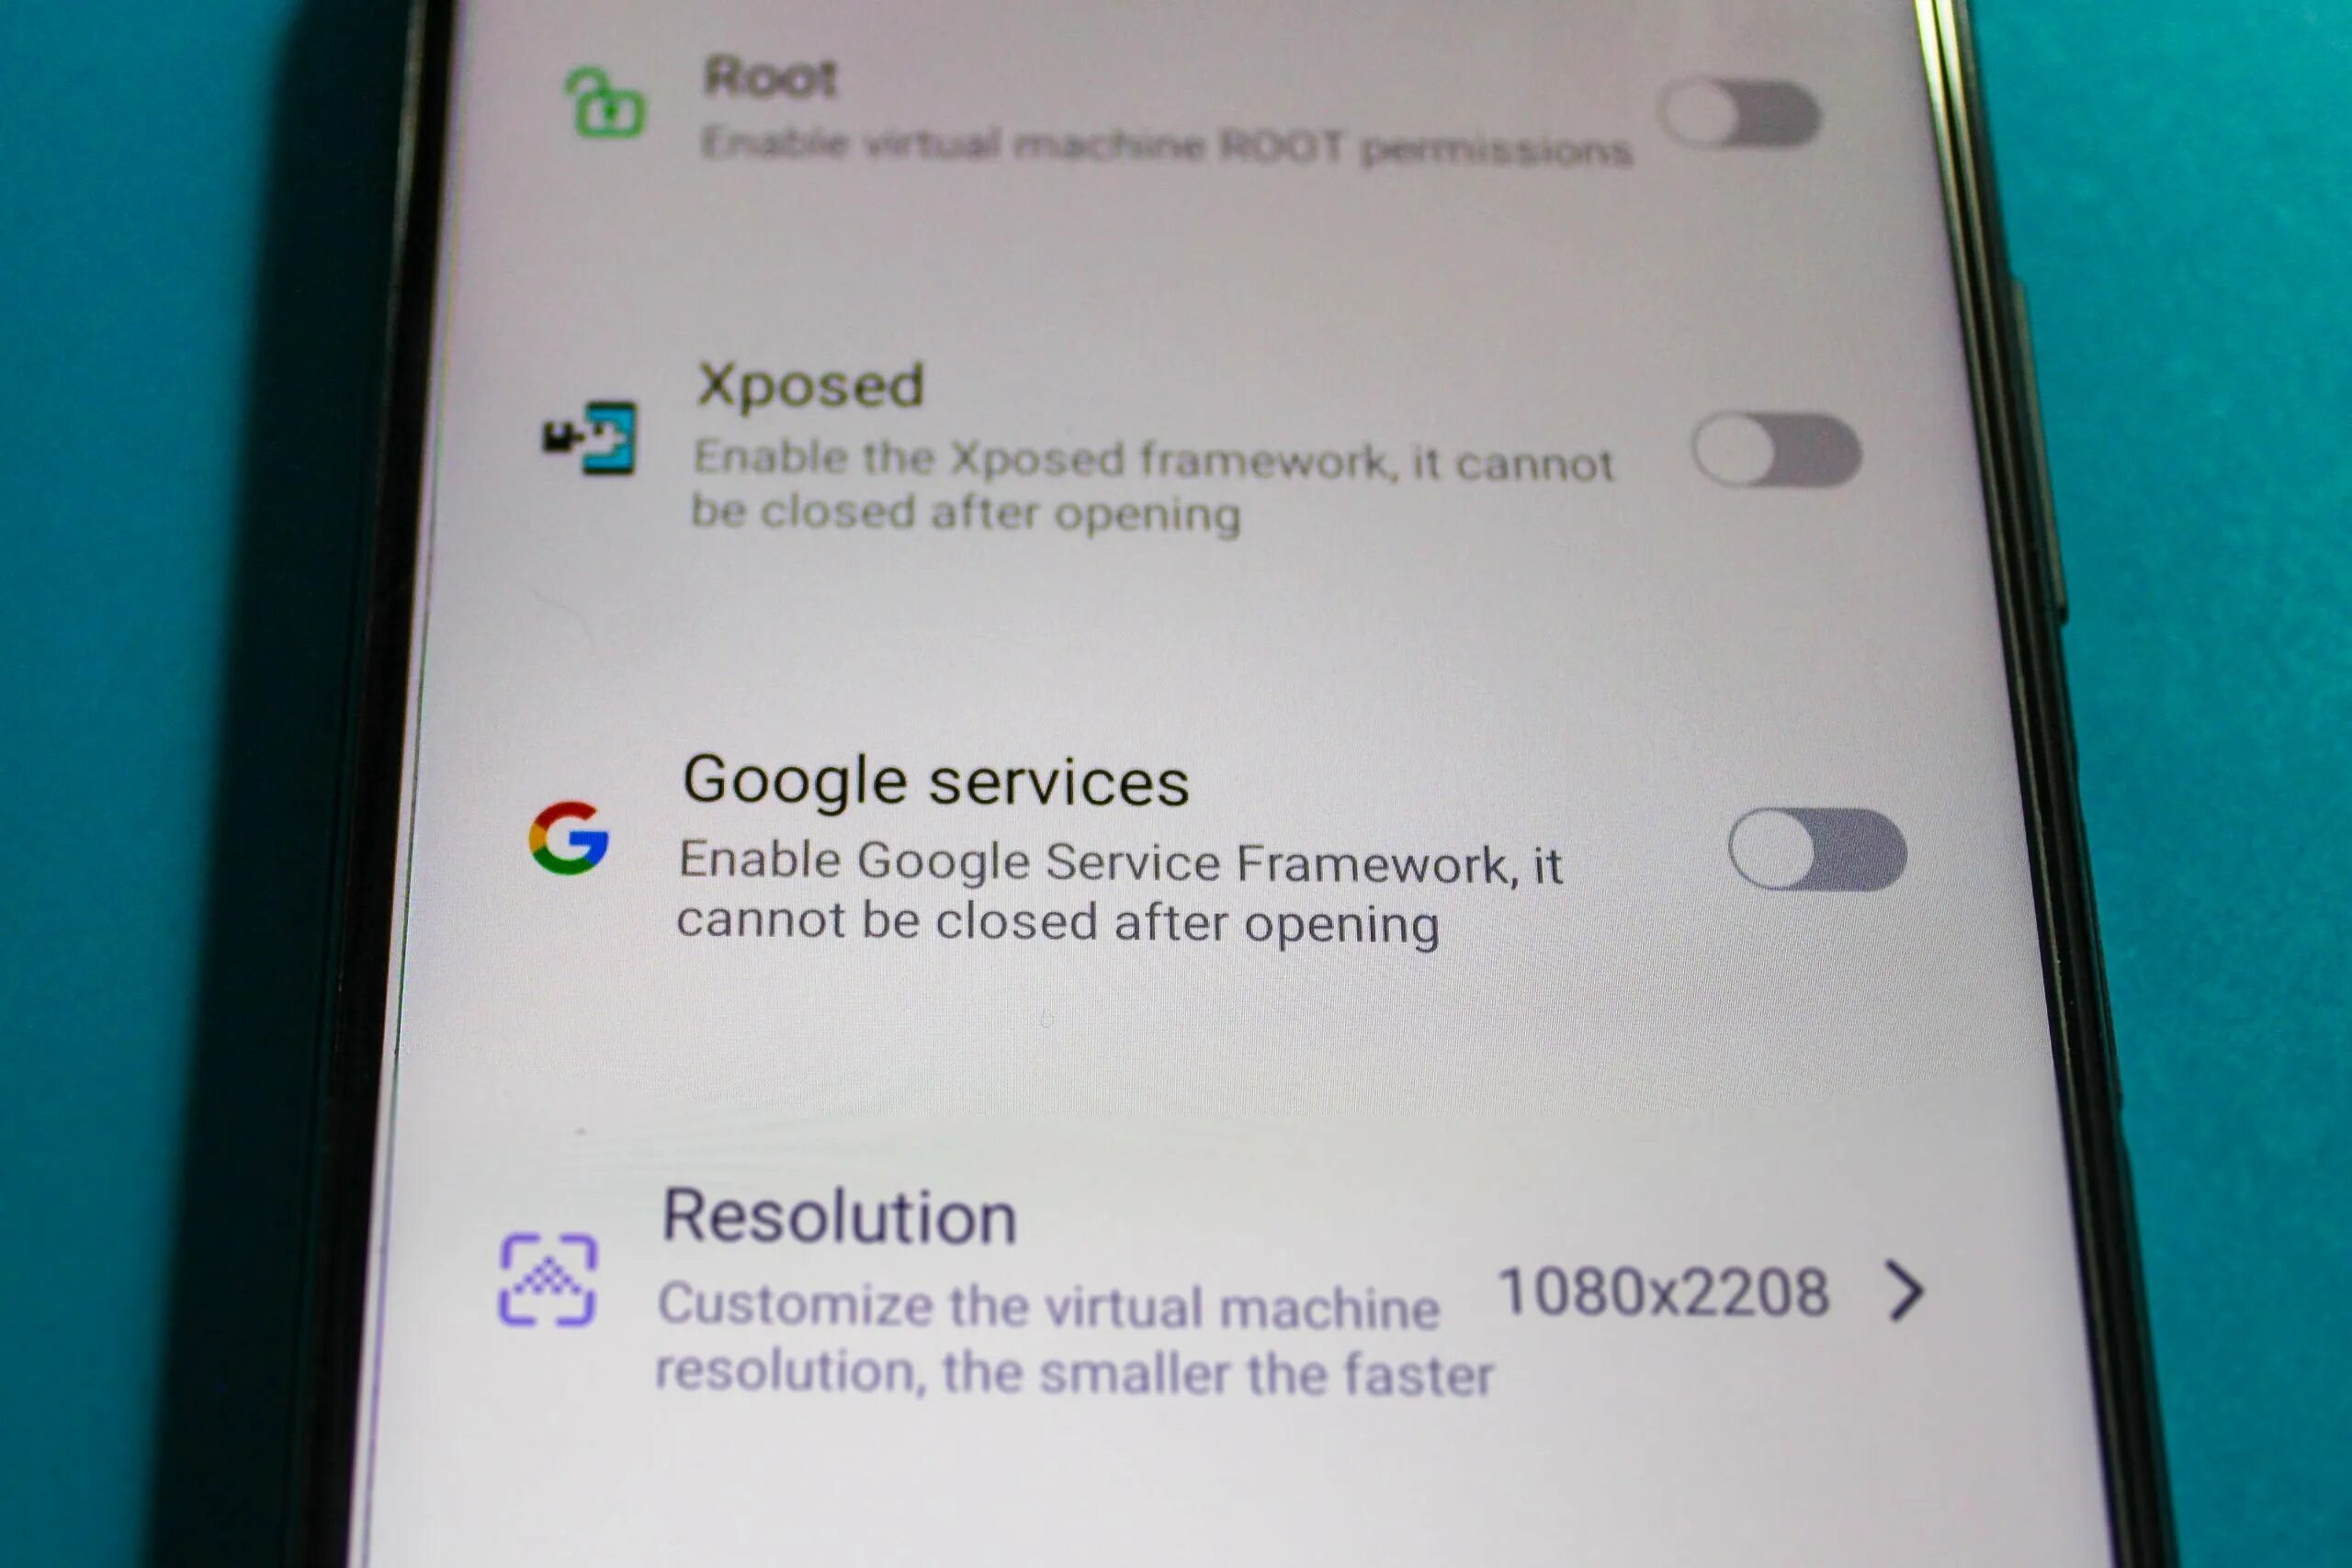 Гугл сервисы на Huawei. Как поставить гугл сервисы на Huawei. Google services Framework. Гугл фото на Хуавей.